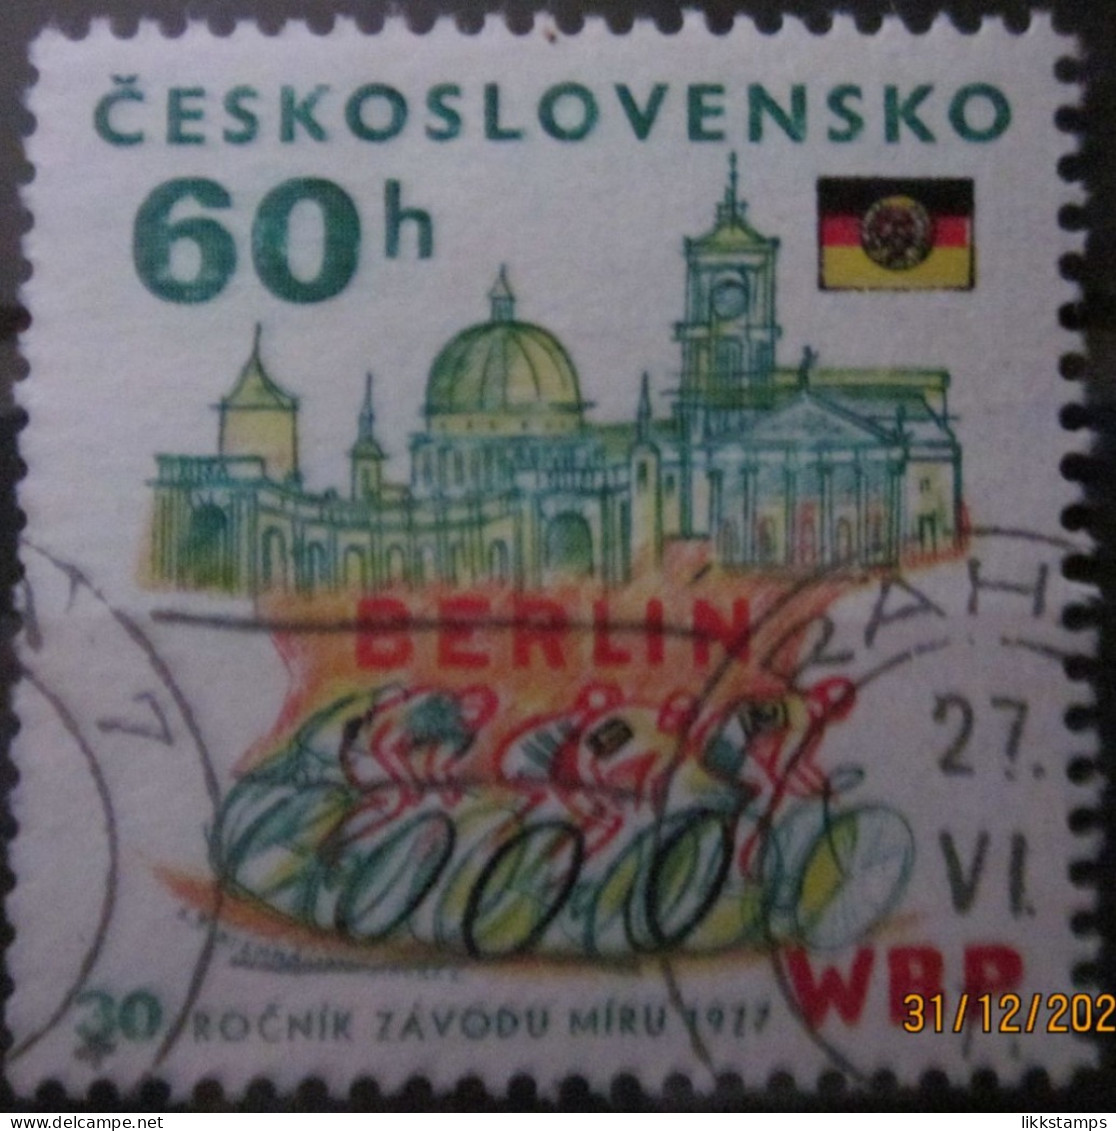 CZECHOSLOVAKIA 1977 ~ S.G. 2333, ~ THE 30th ANNIVERSARY OF THE PEACE CYCLE RACE. ~ VFU #03195 - Usati